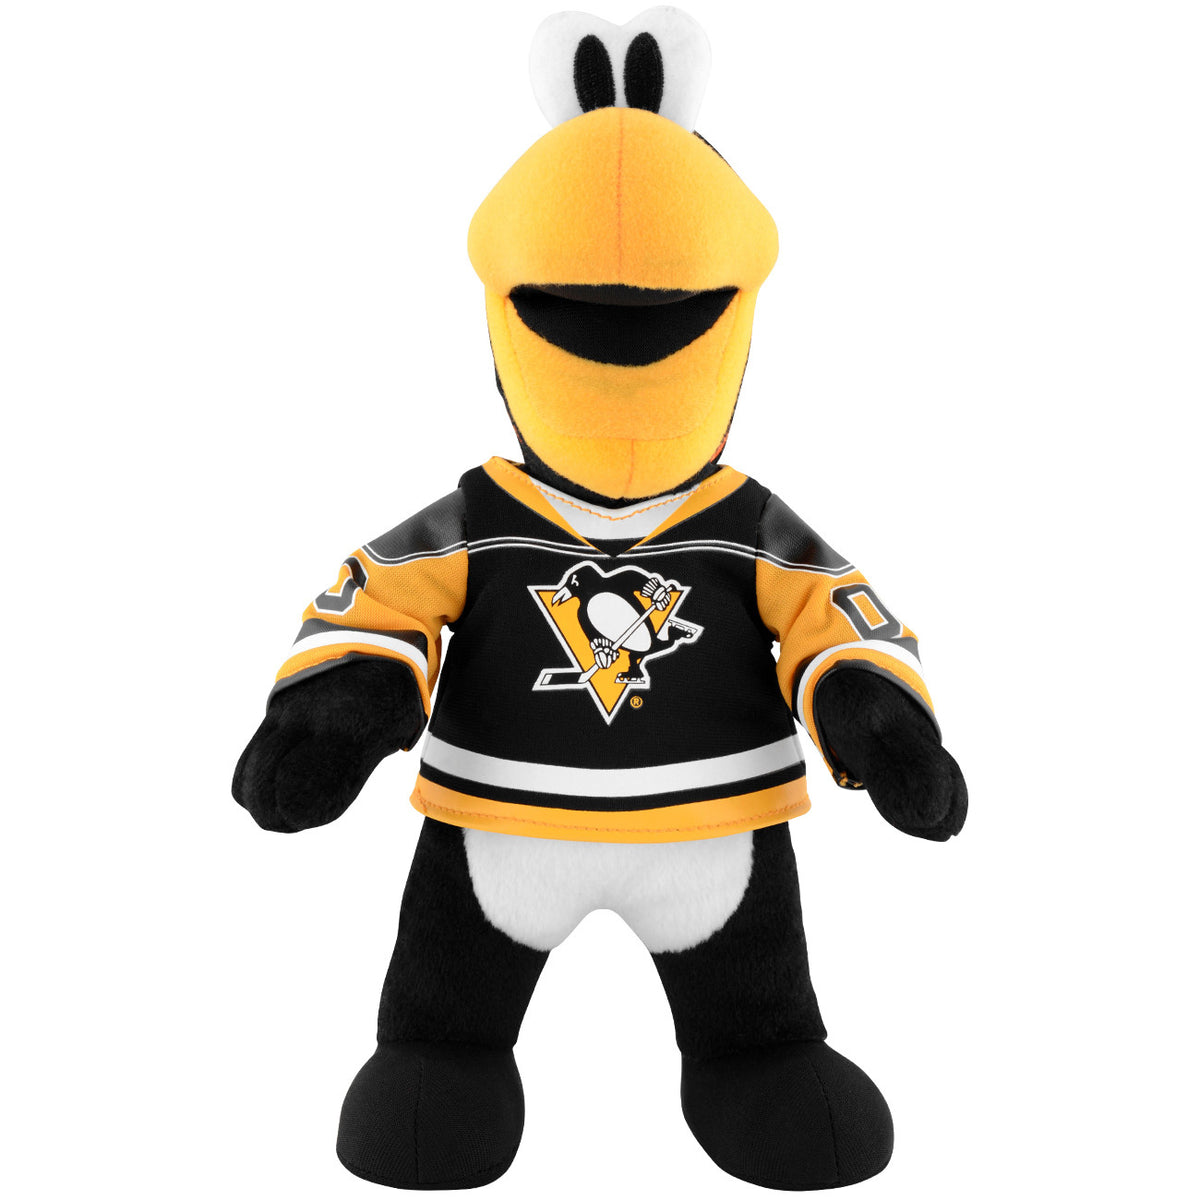 Pittsburgh Penguins Iceburgh 10&quot; Mascot Plush Figure